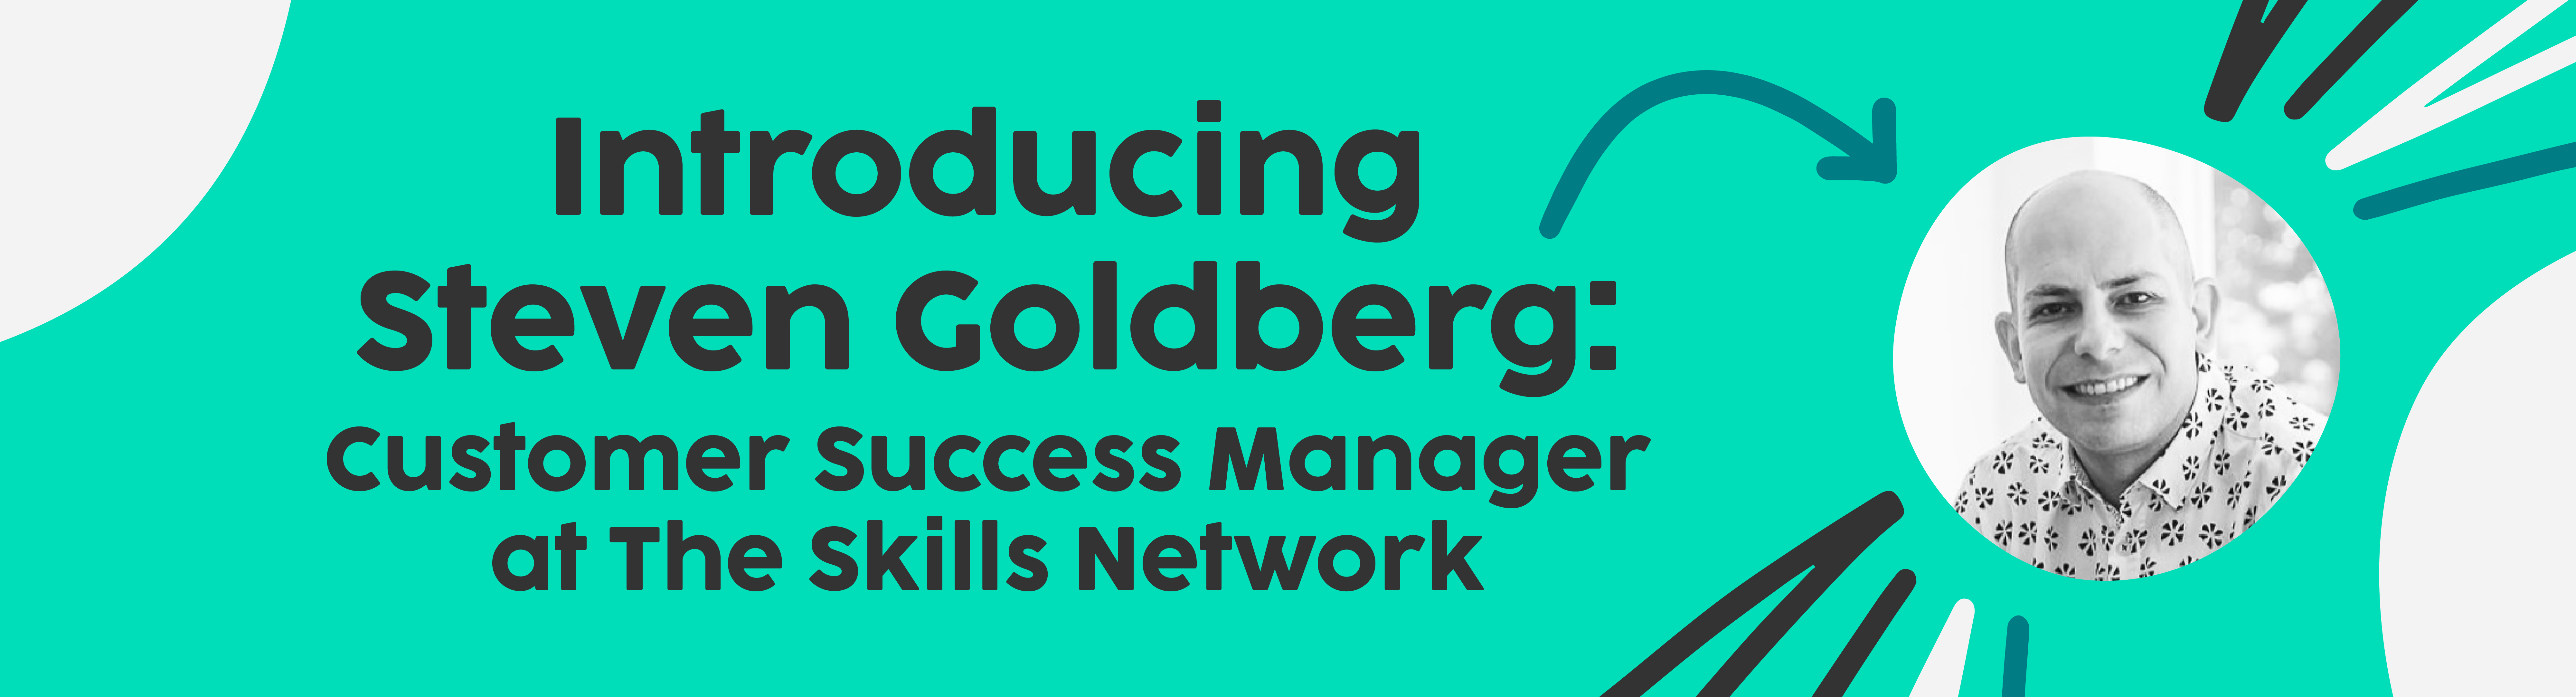 Introducing Steven Goldberg- Customer Success Manager at The Skills Network